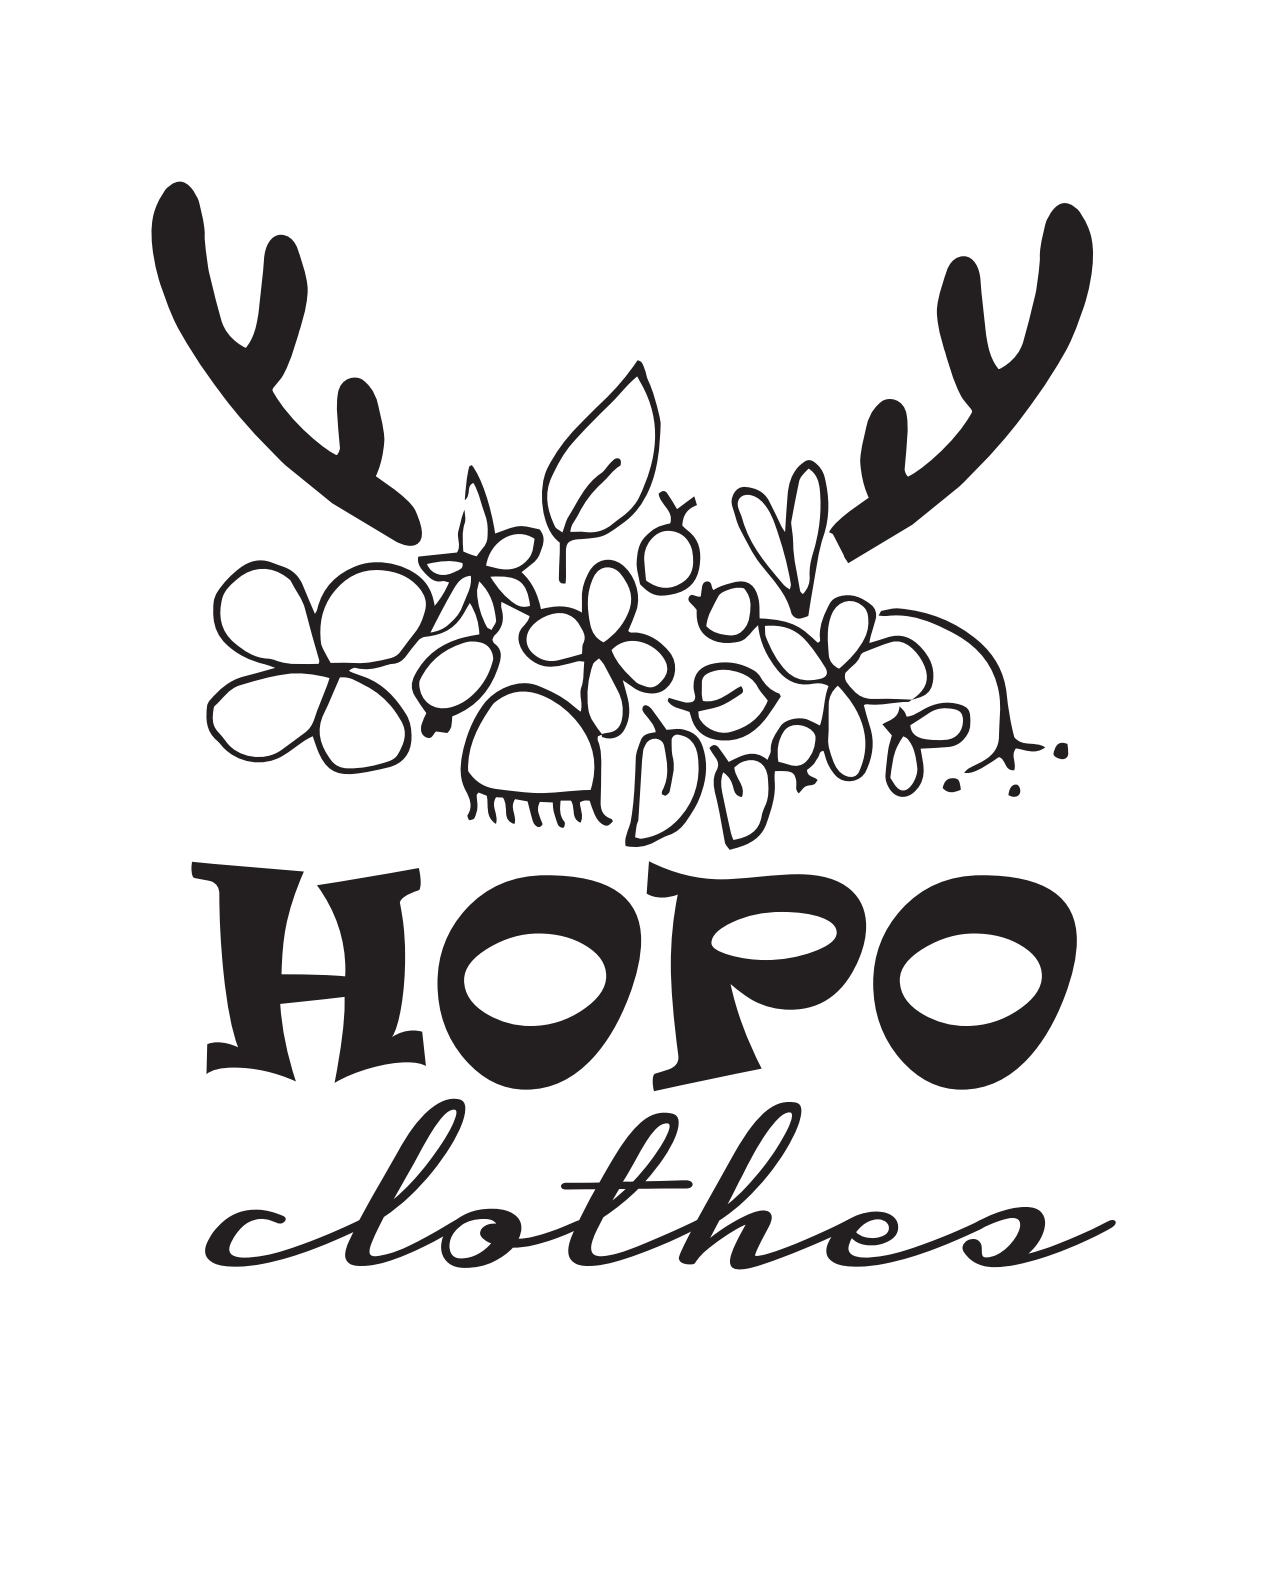 HopoClothes